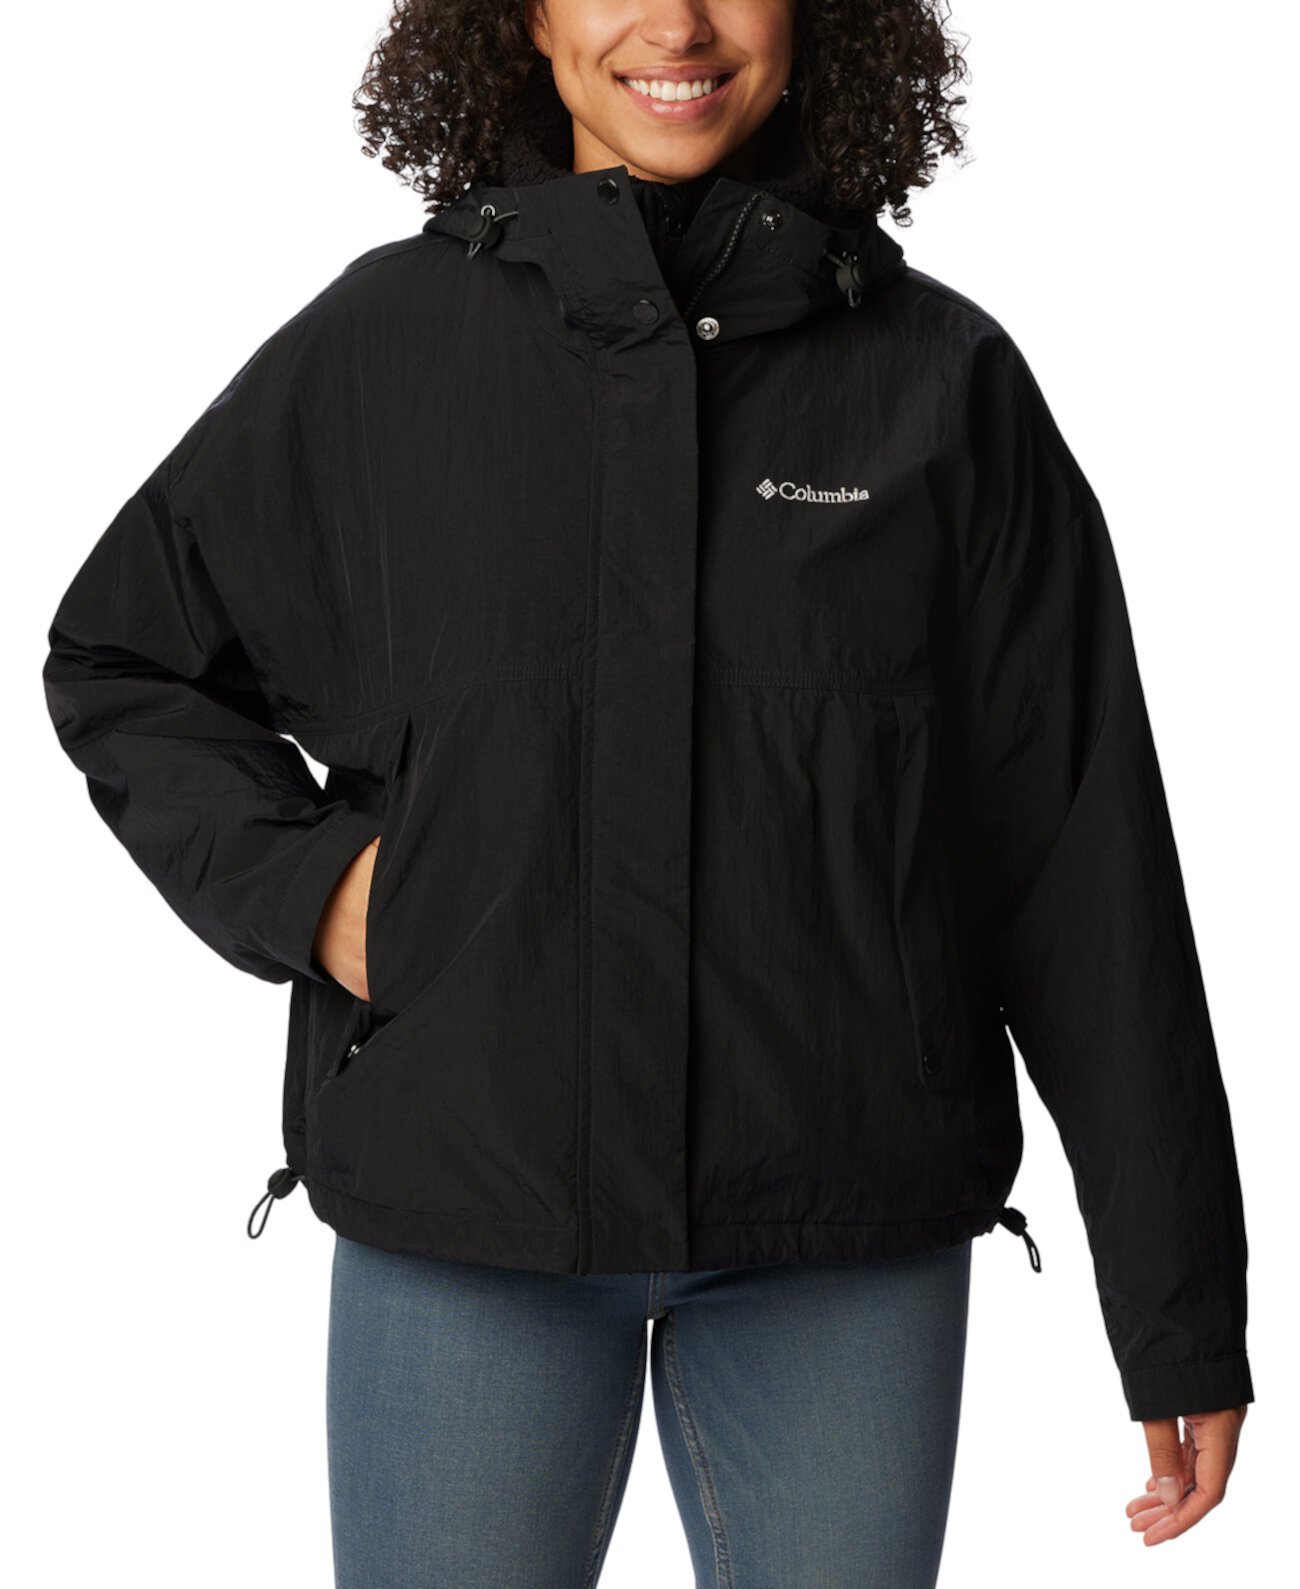 Женская куртка с капюшоном Laurelwoods II Interchange Columbia